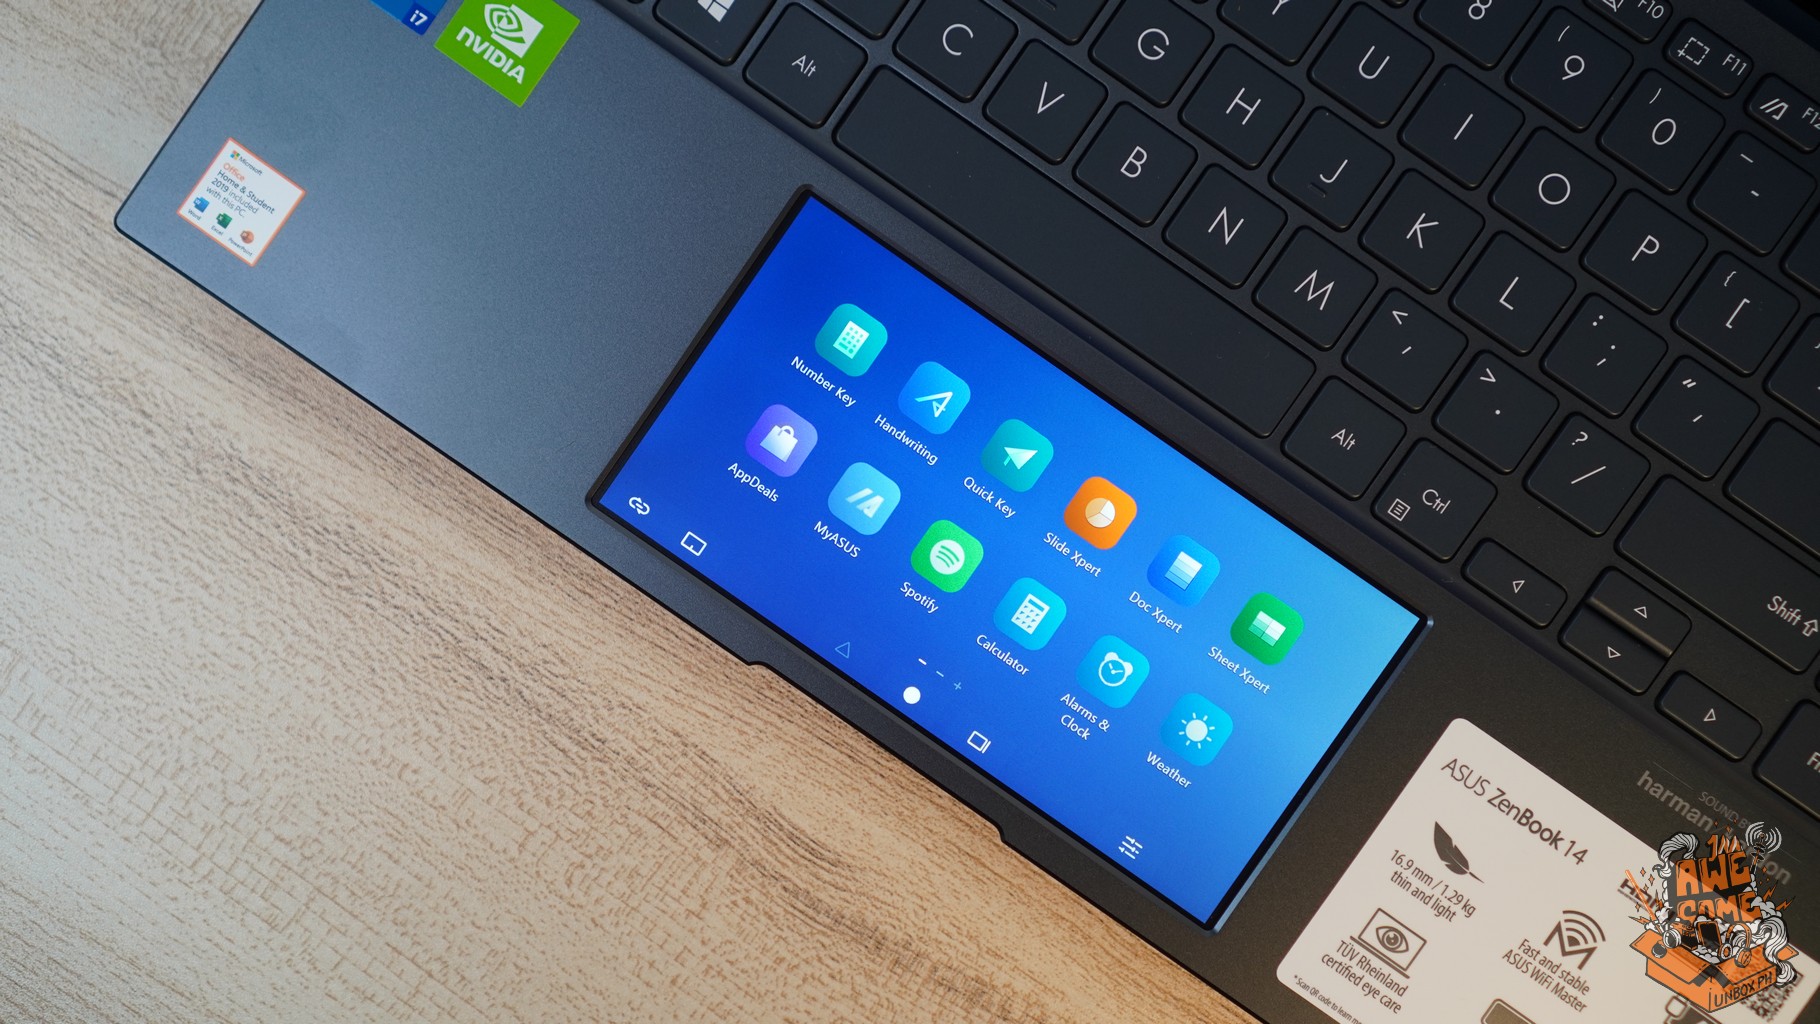 ZenBook 14 UX435EG features